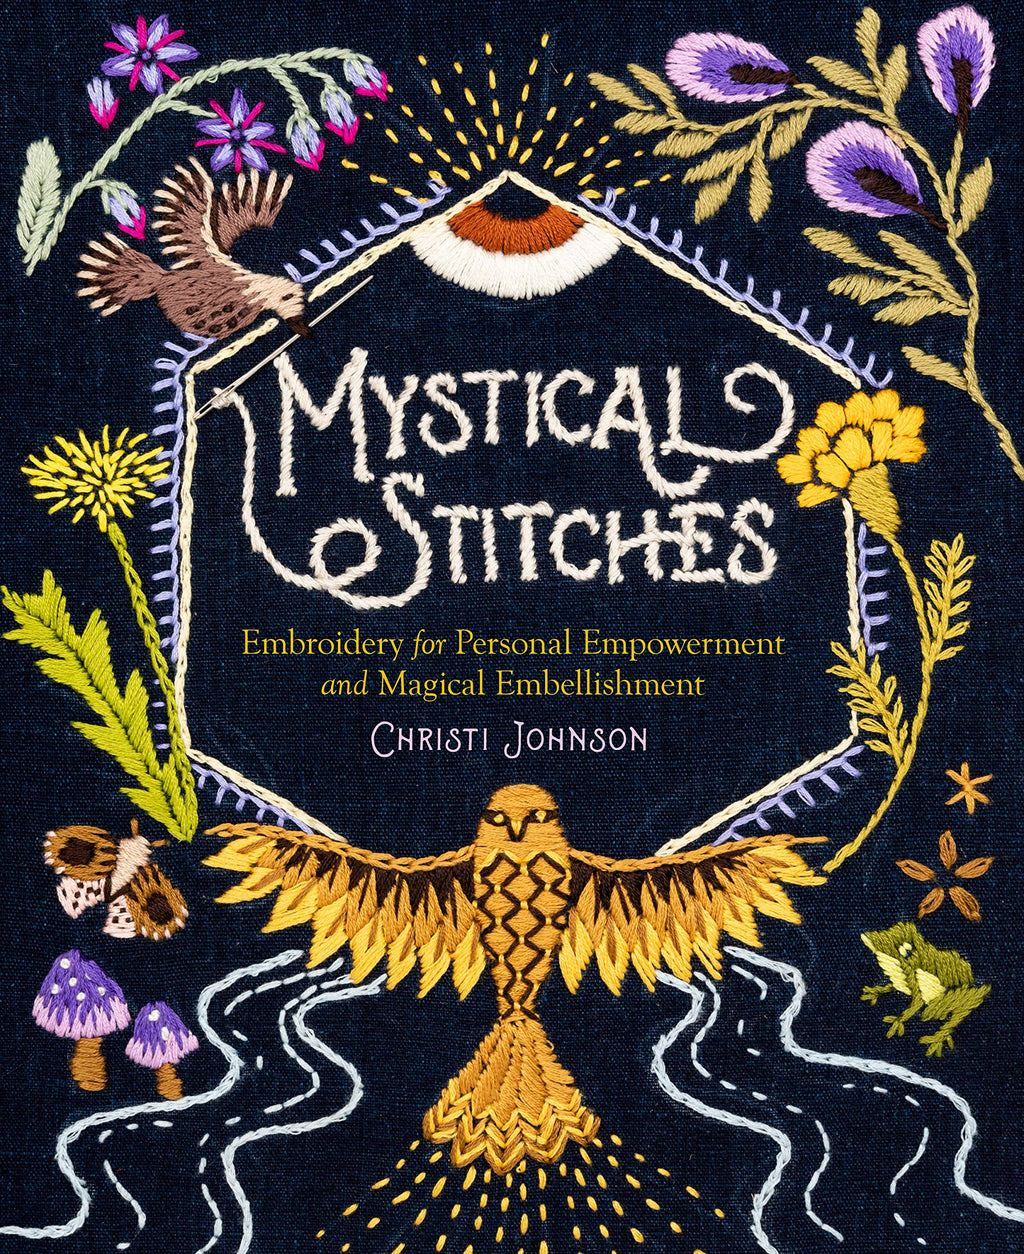 Mystical Stitches by Christi Johnson